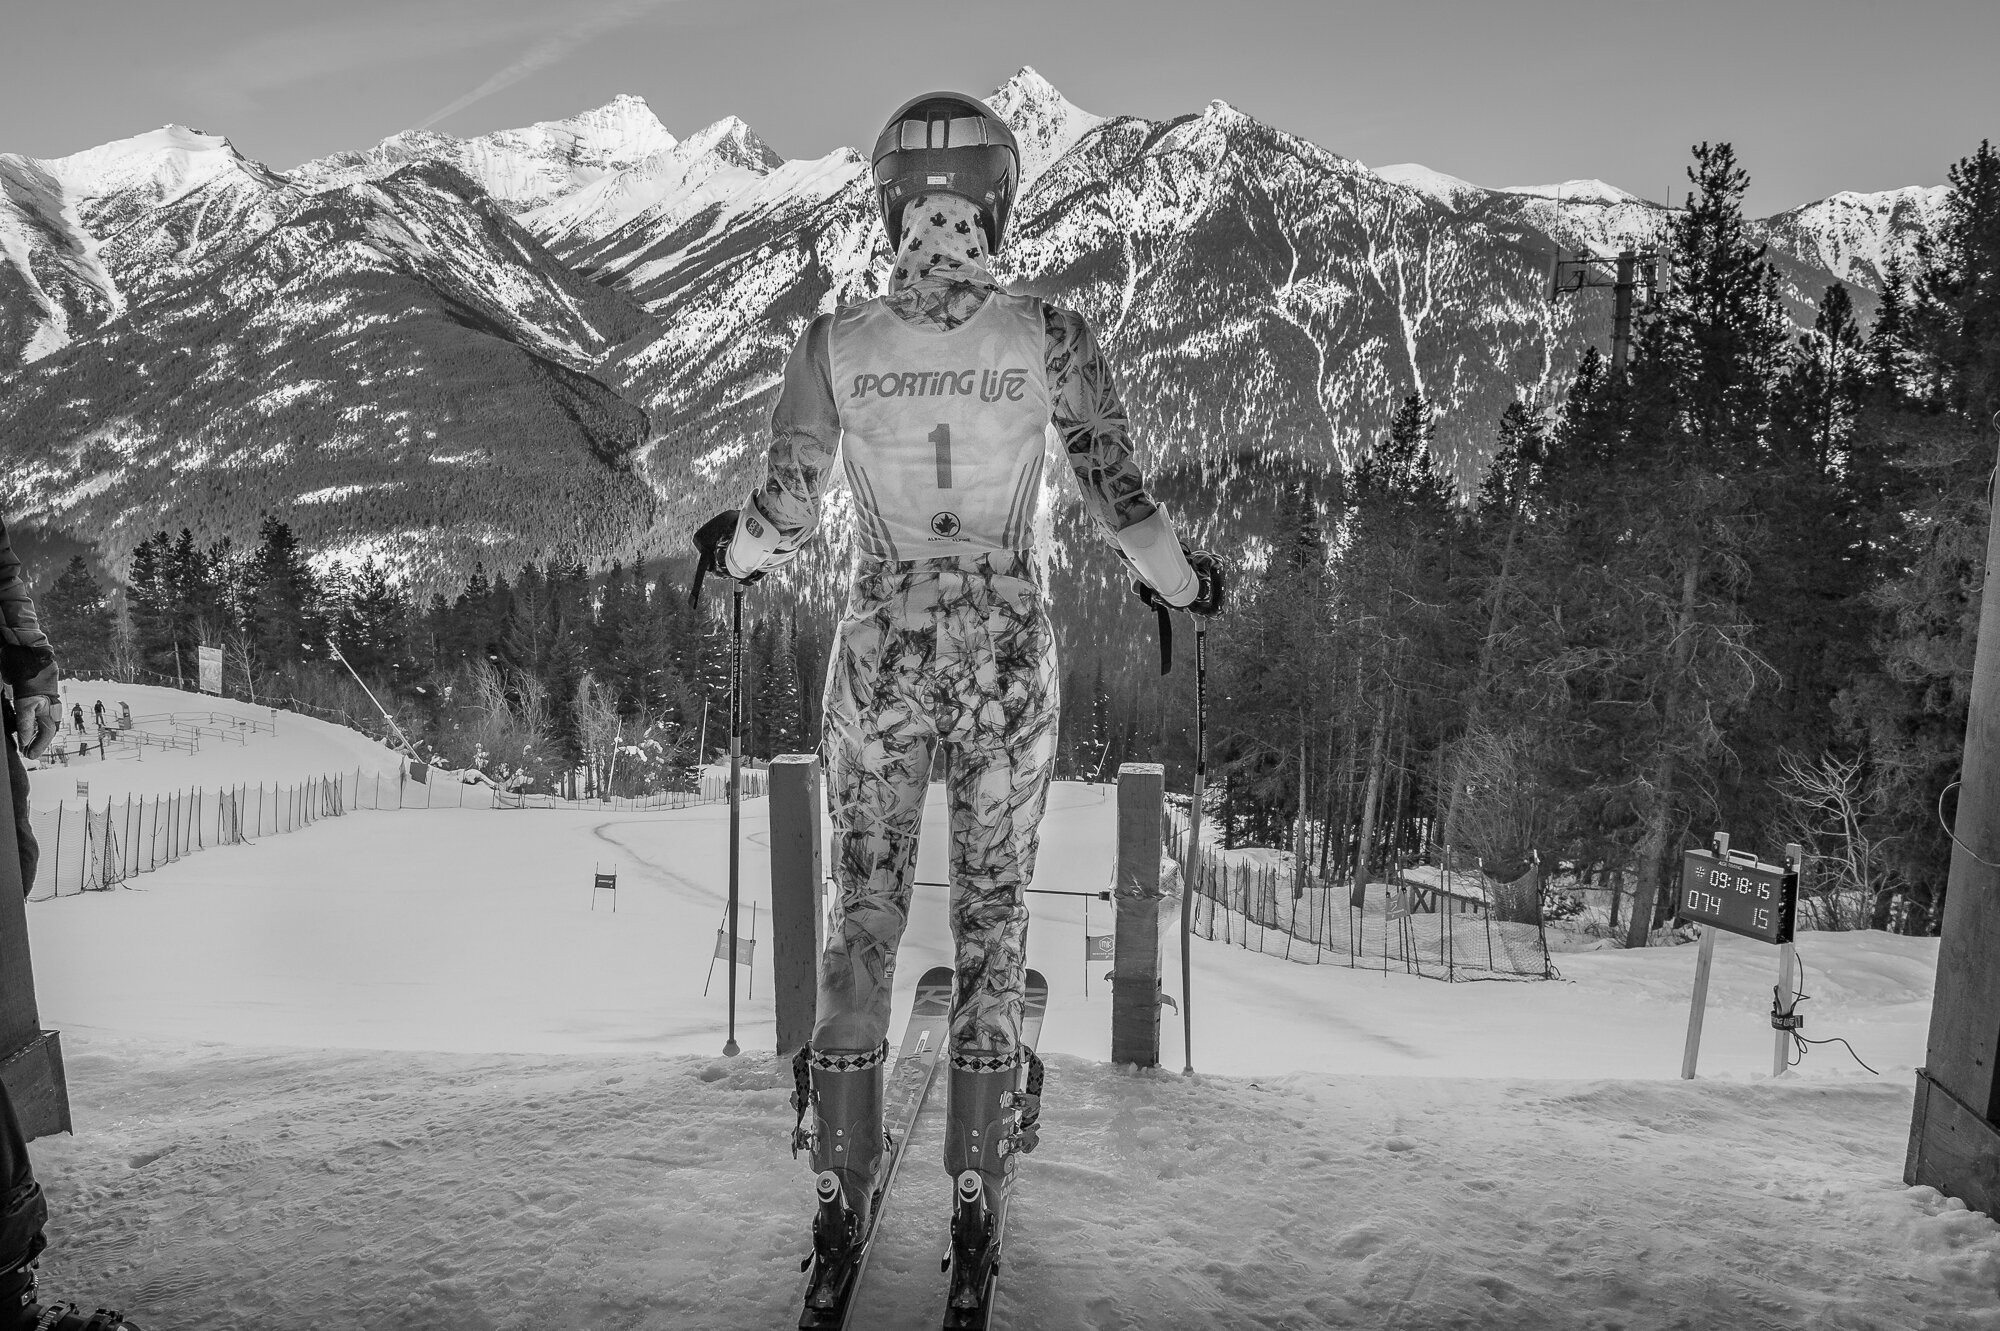 Alberta Alpine Sporting Life U16 Series – Panorama February 11th-13th: A Photo Essay